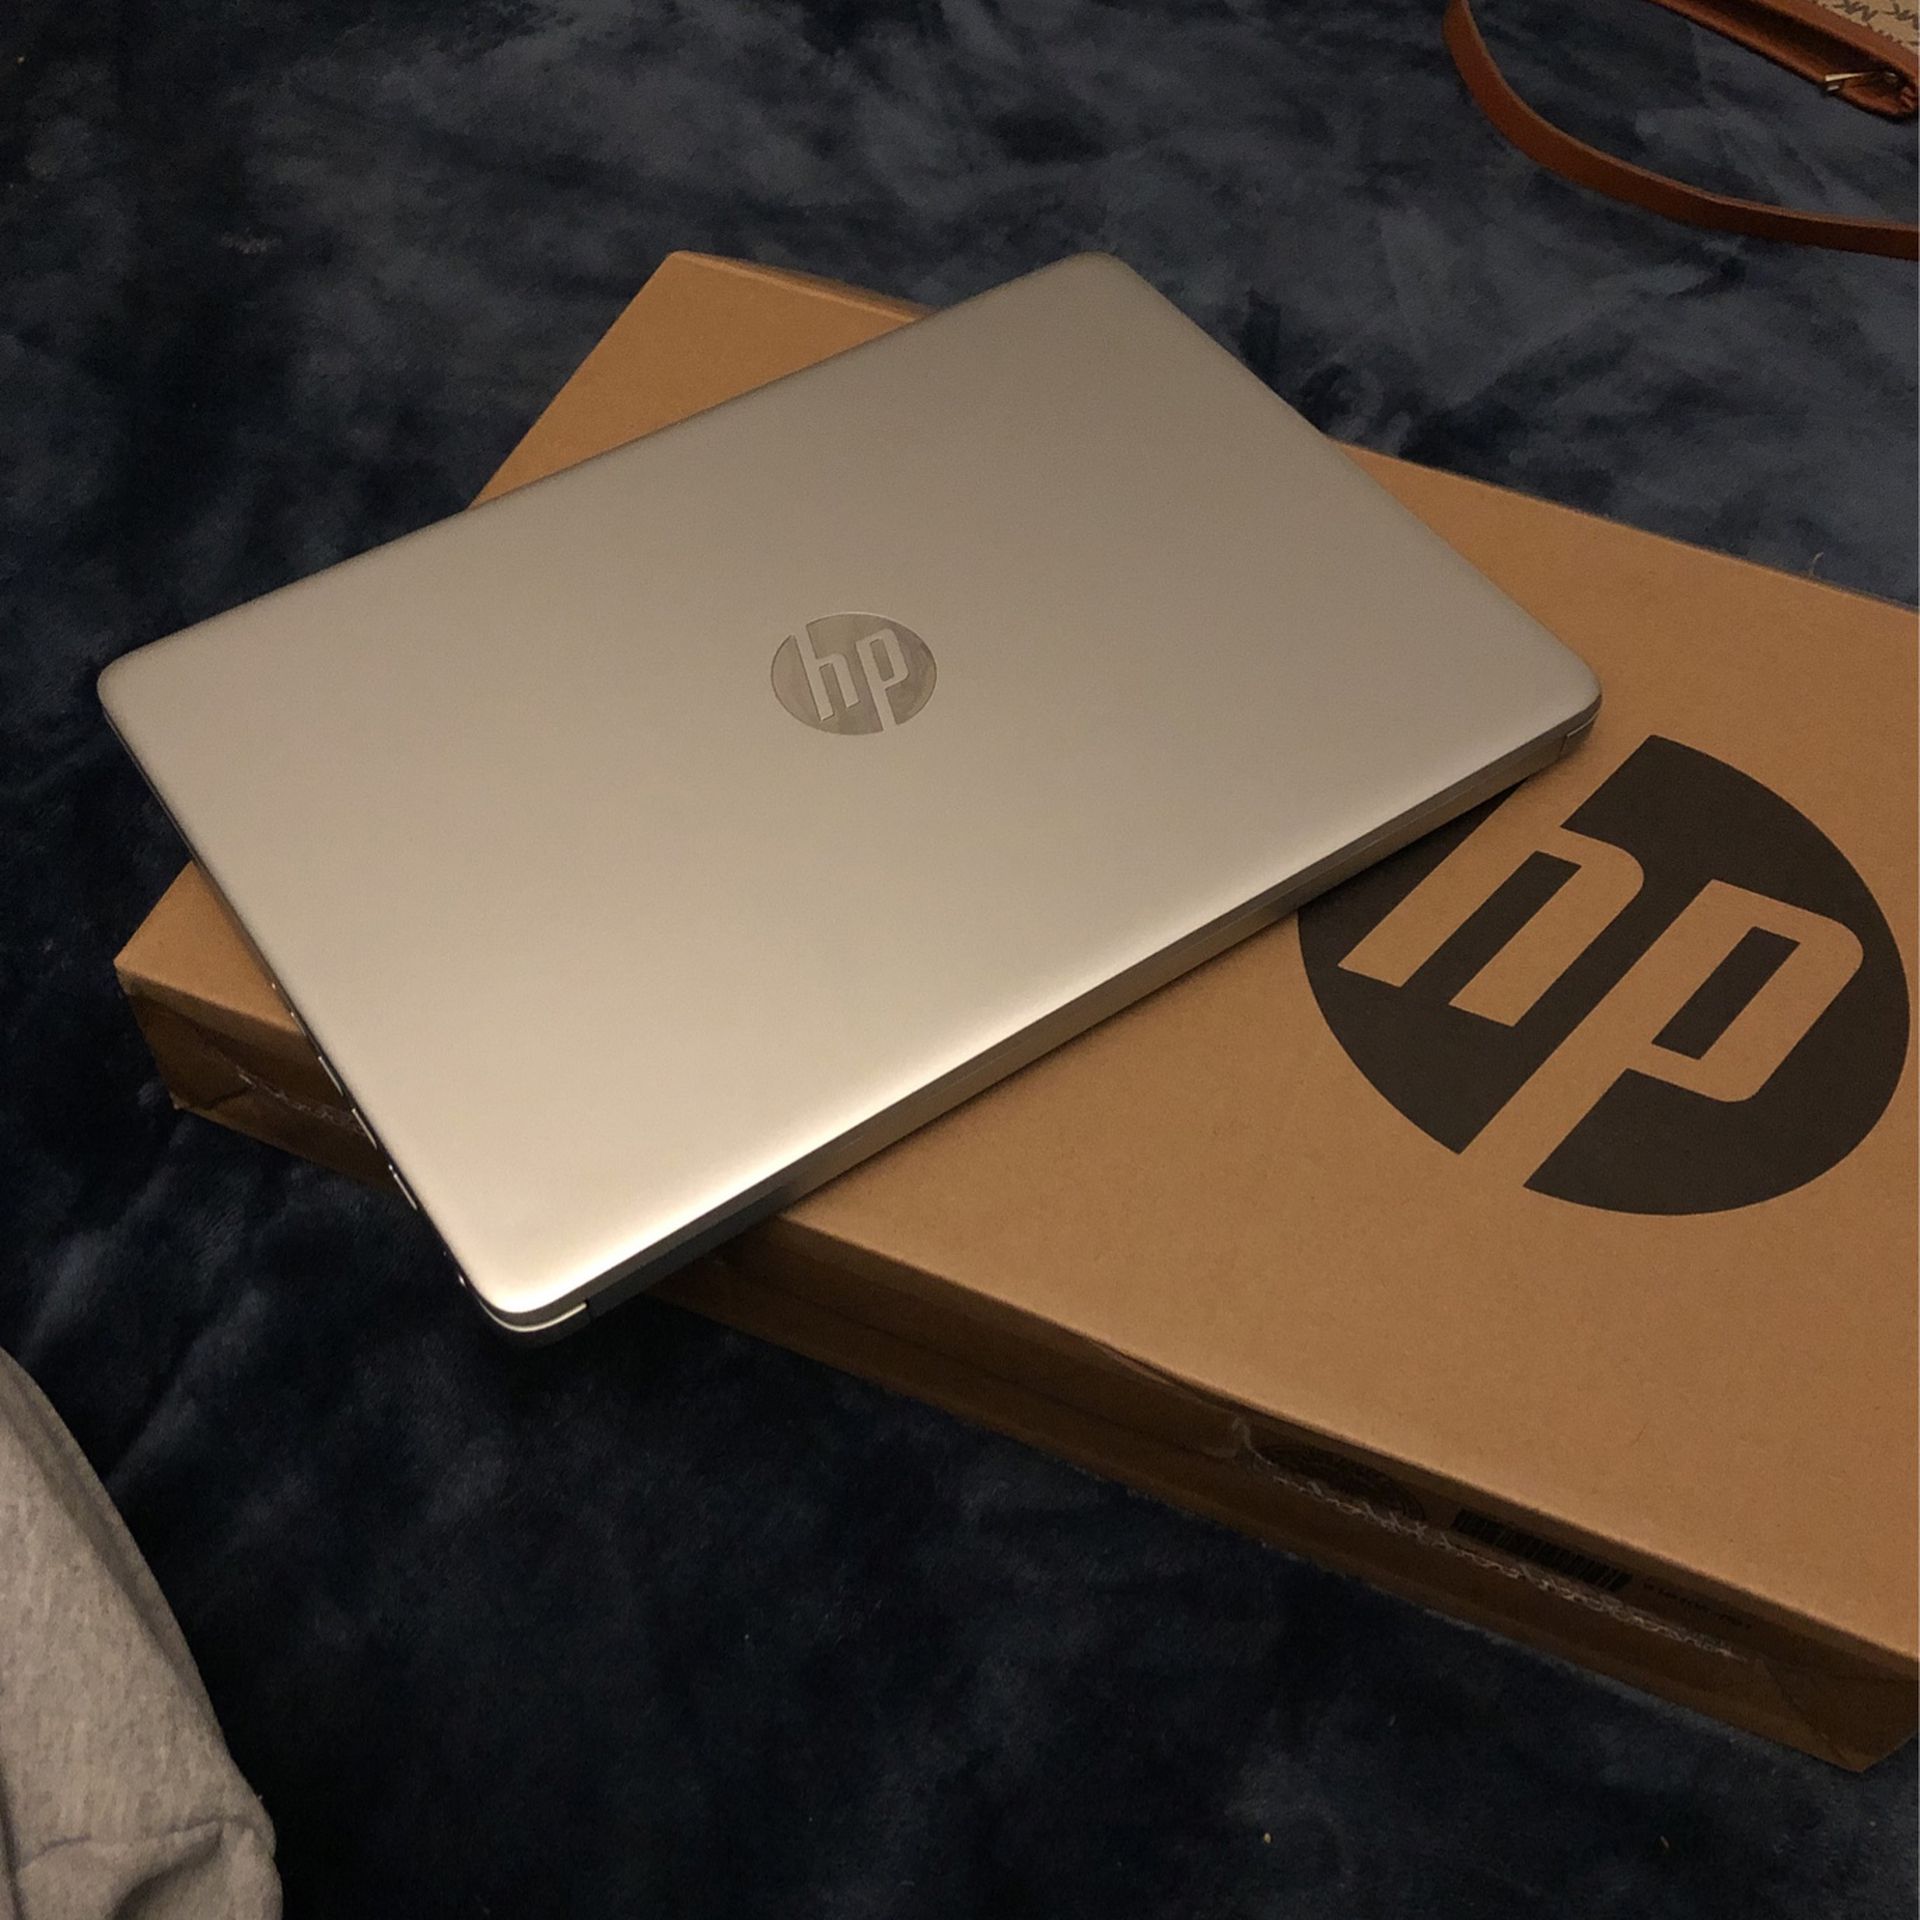 Brand New 14” HP Laptop